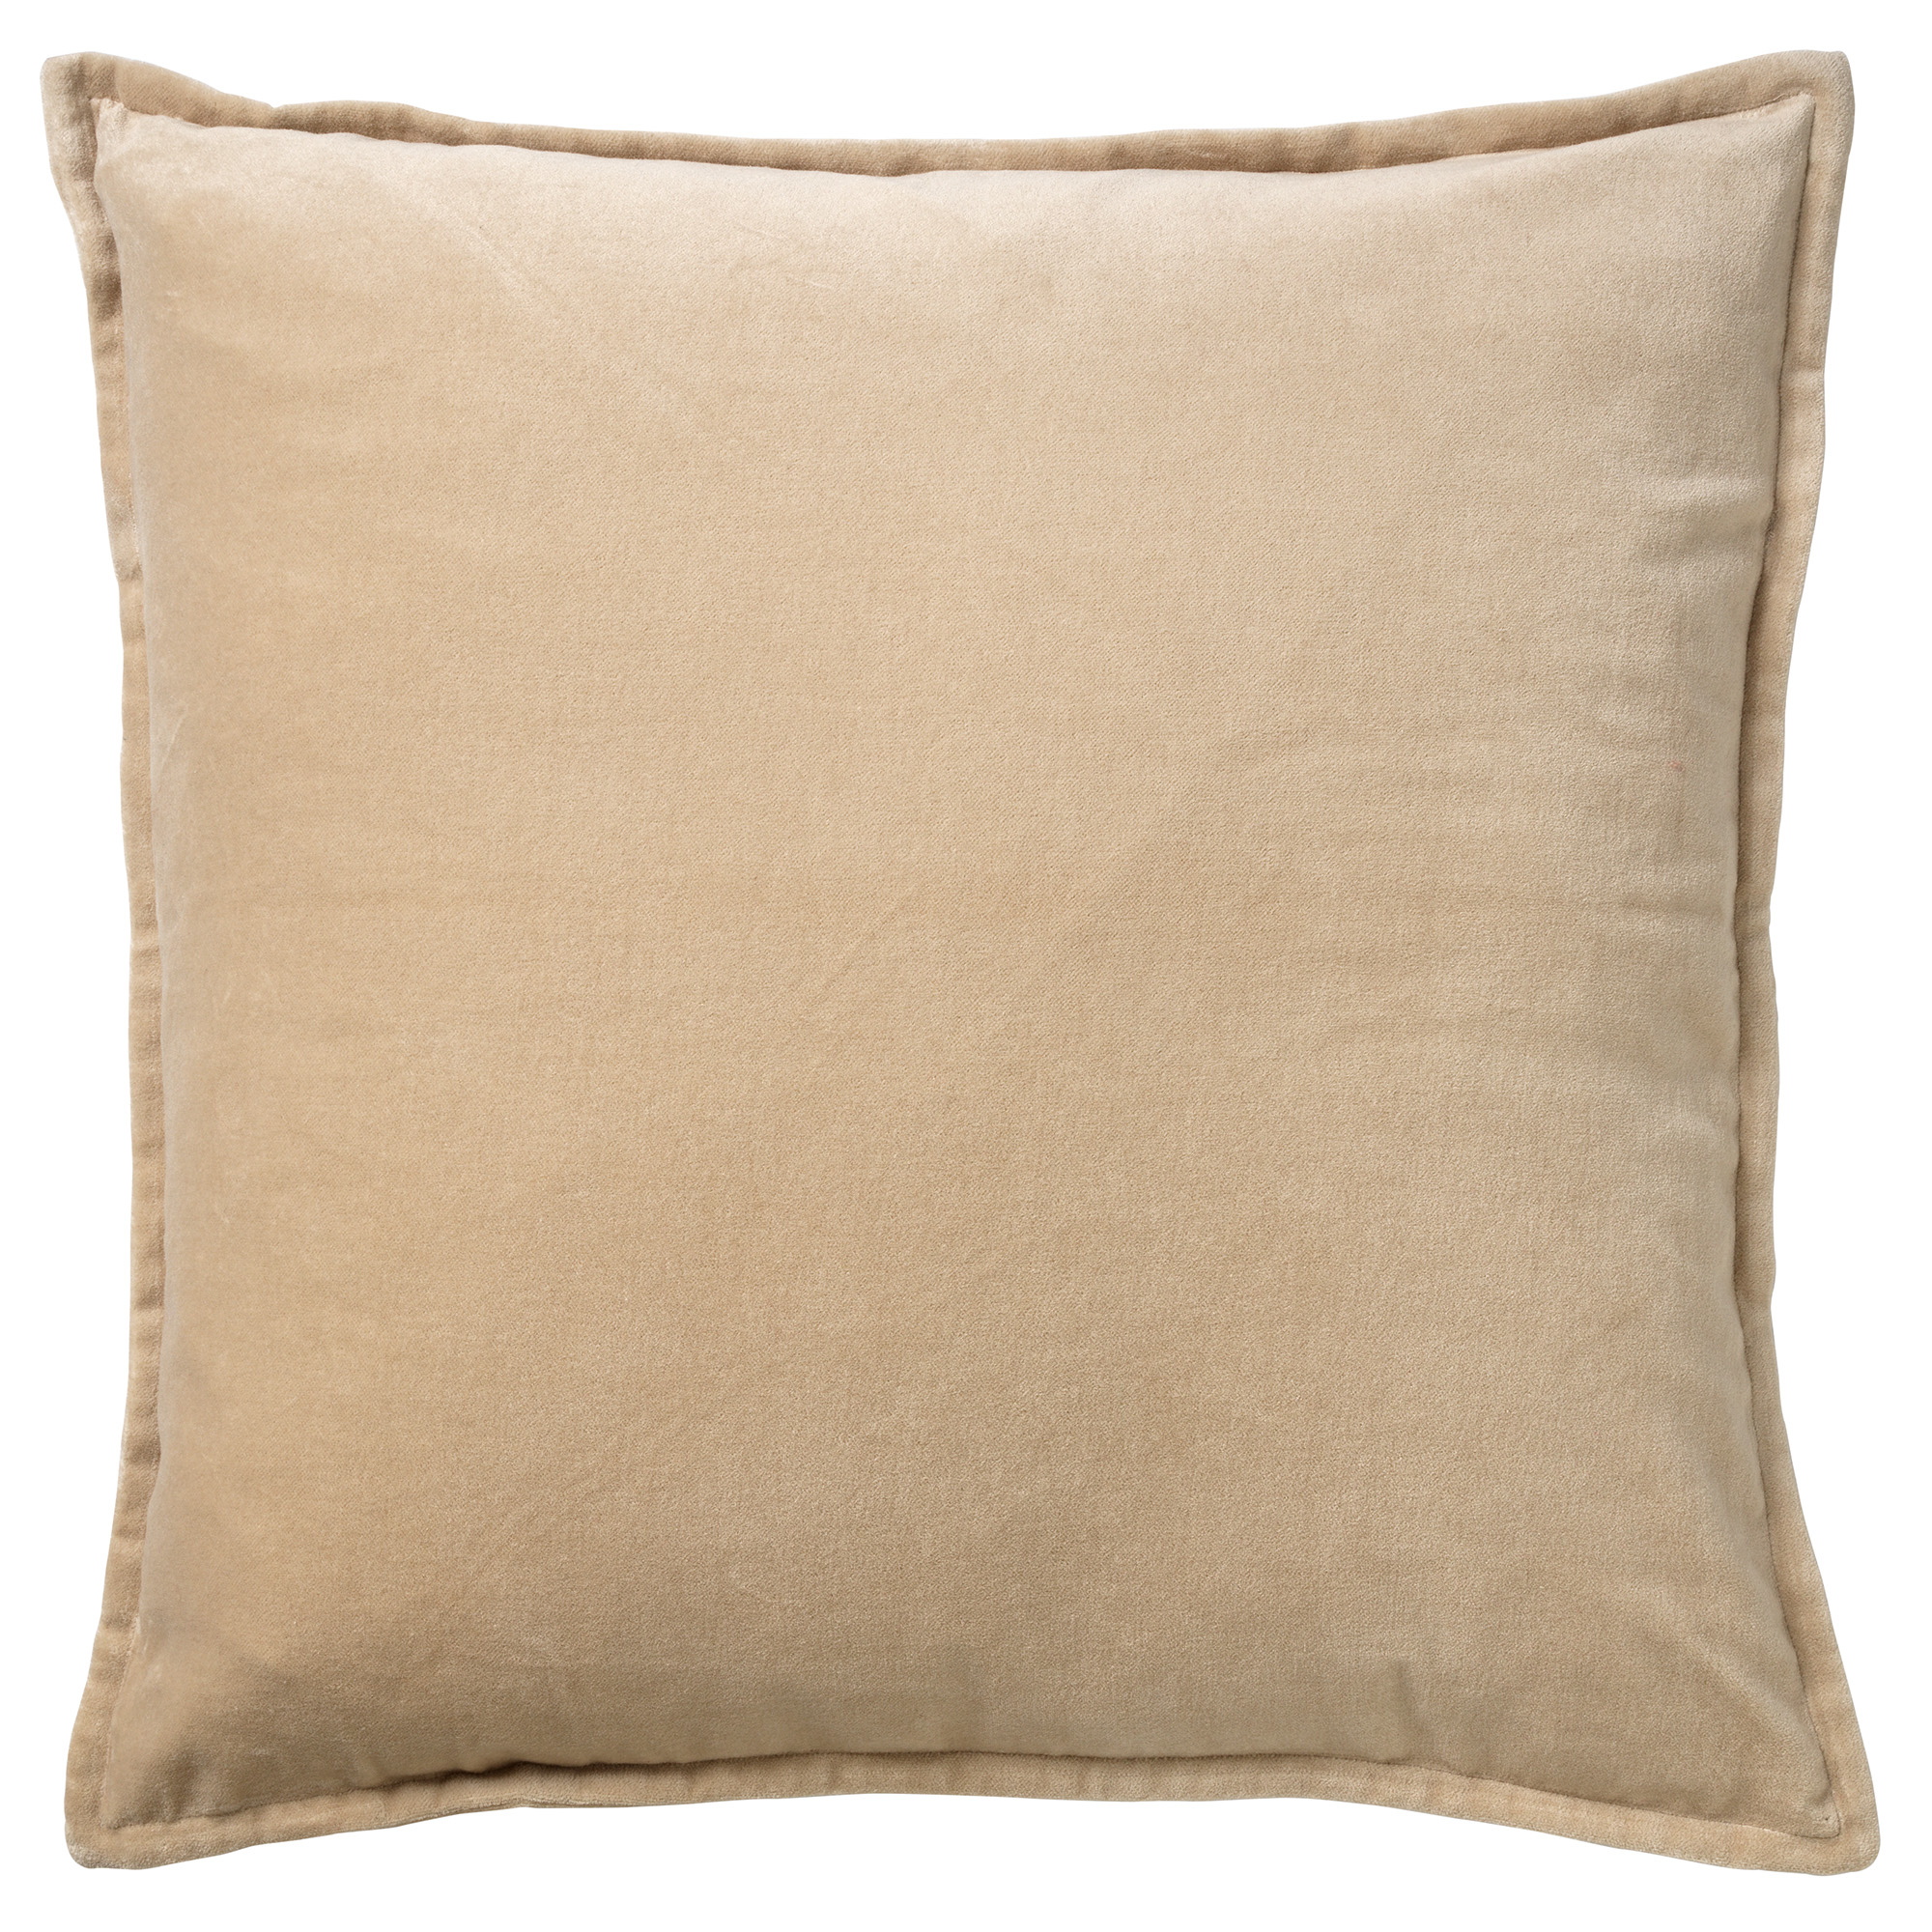 CAITH - Cushion cover 50x50 cm Pumice Stone - beige